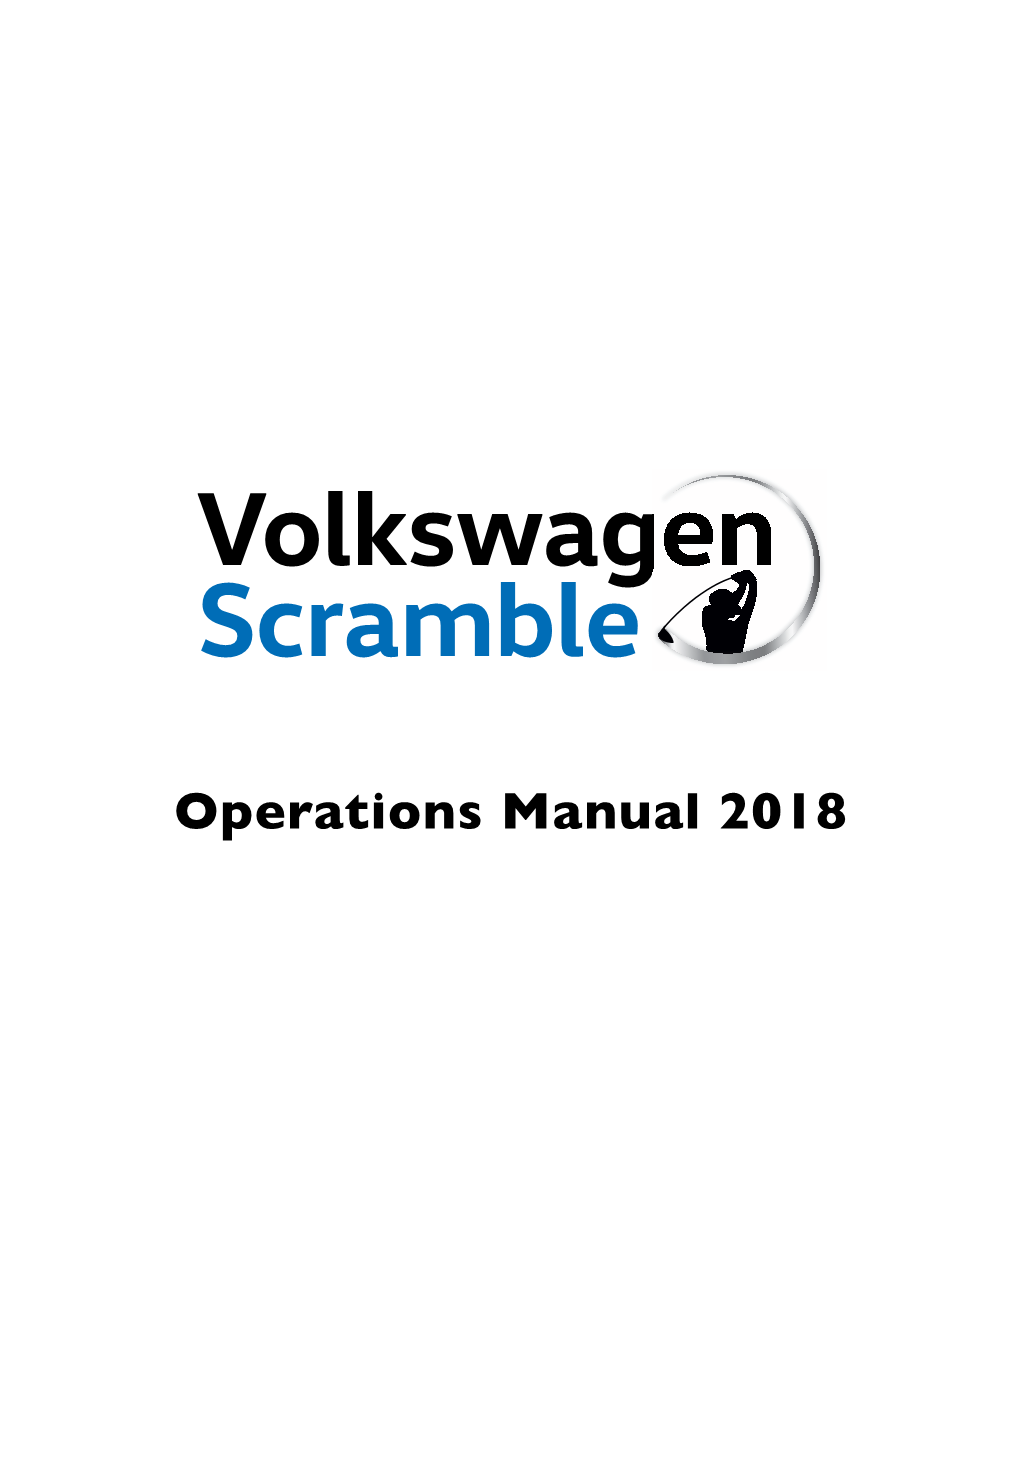 Operations Manual 2018 Volkswagen Scramble Operations Manual 2018